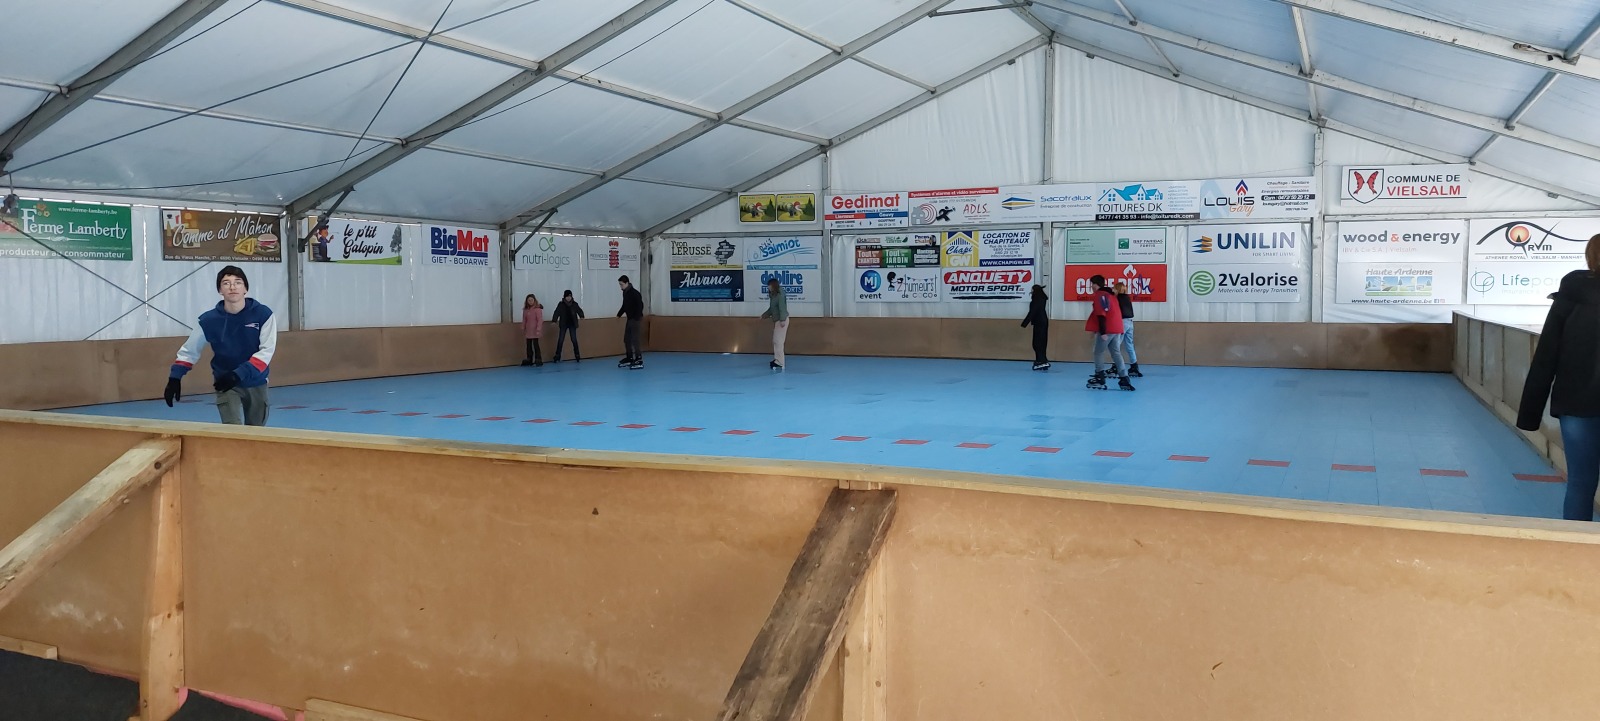 Roller skating track under a tent